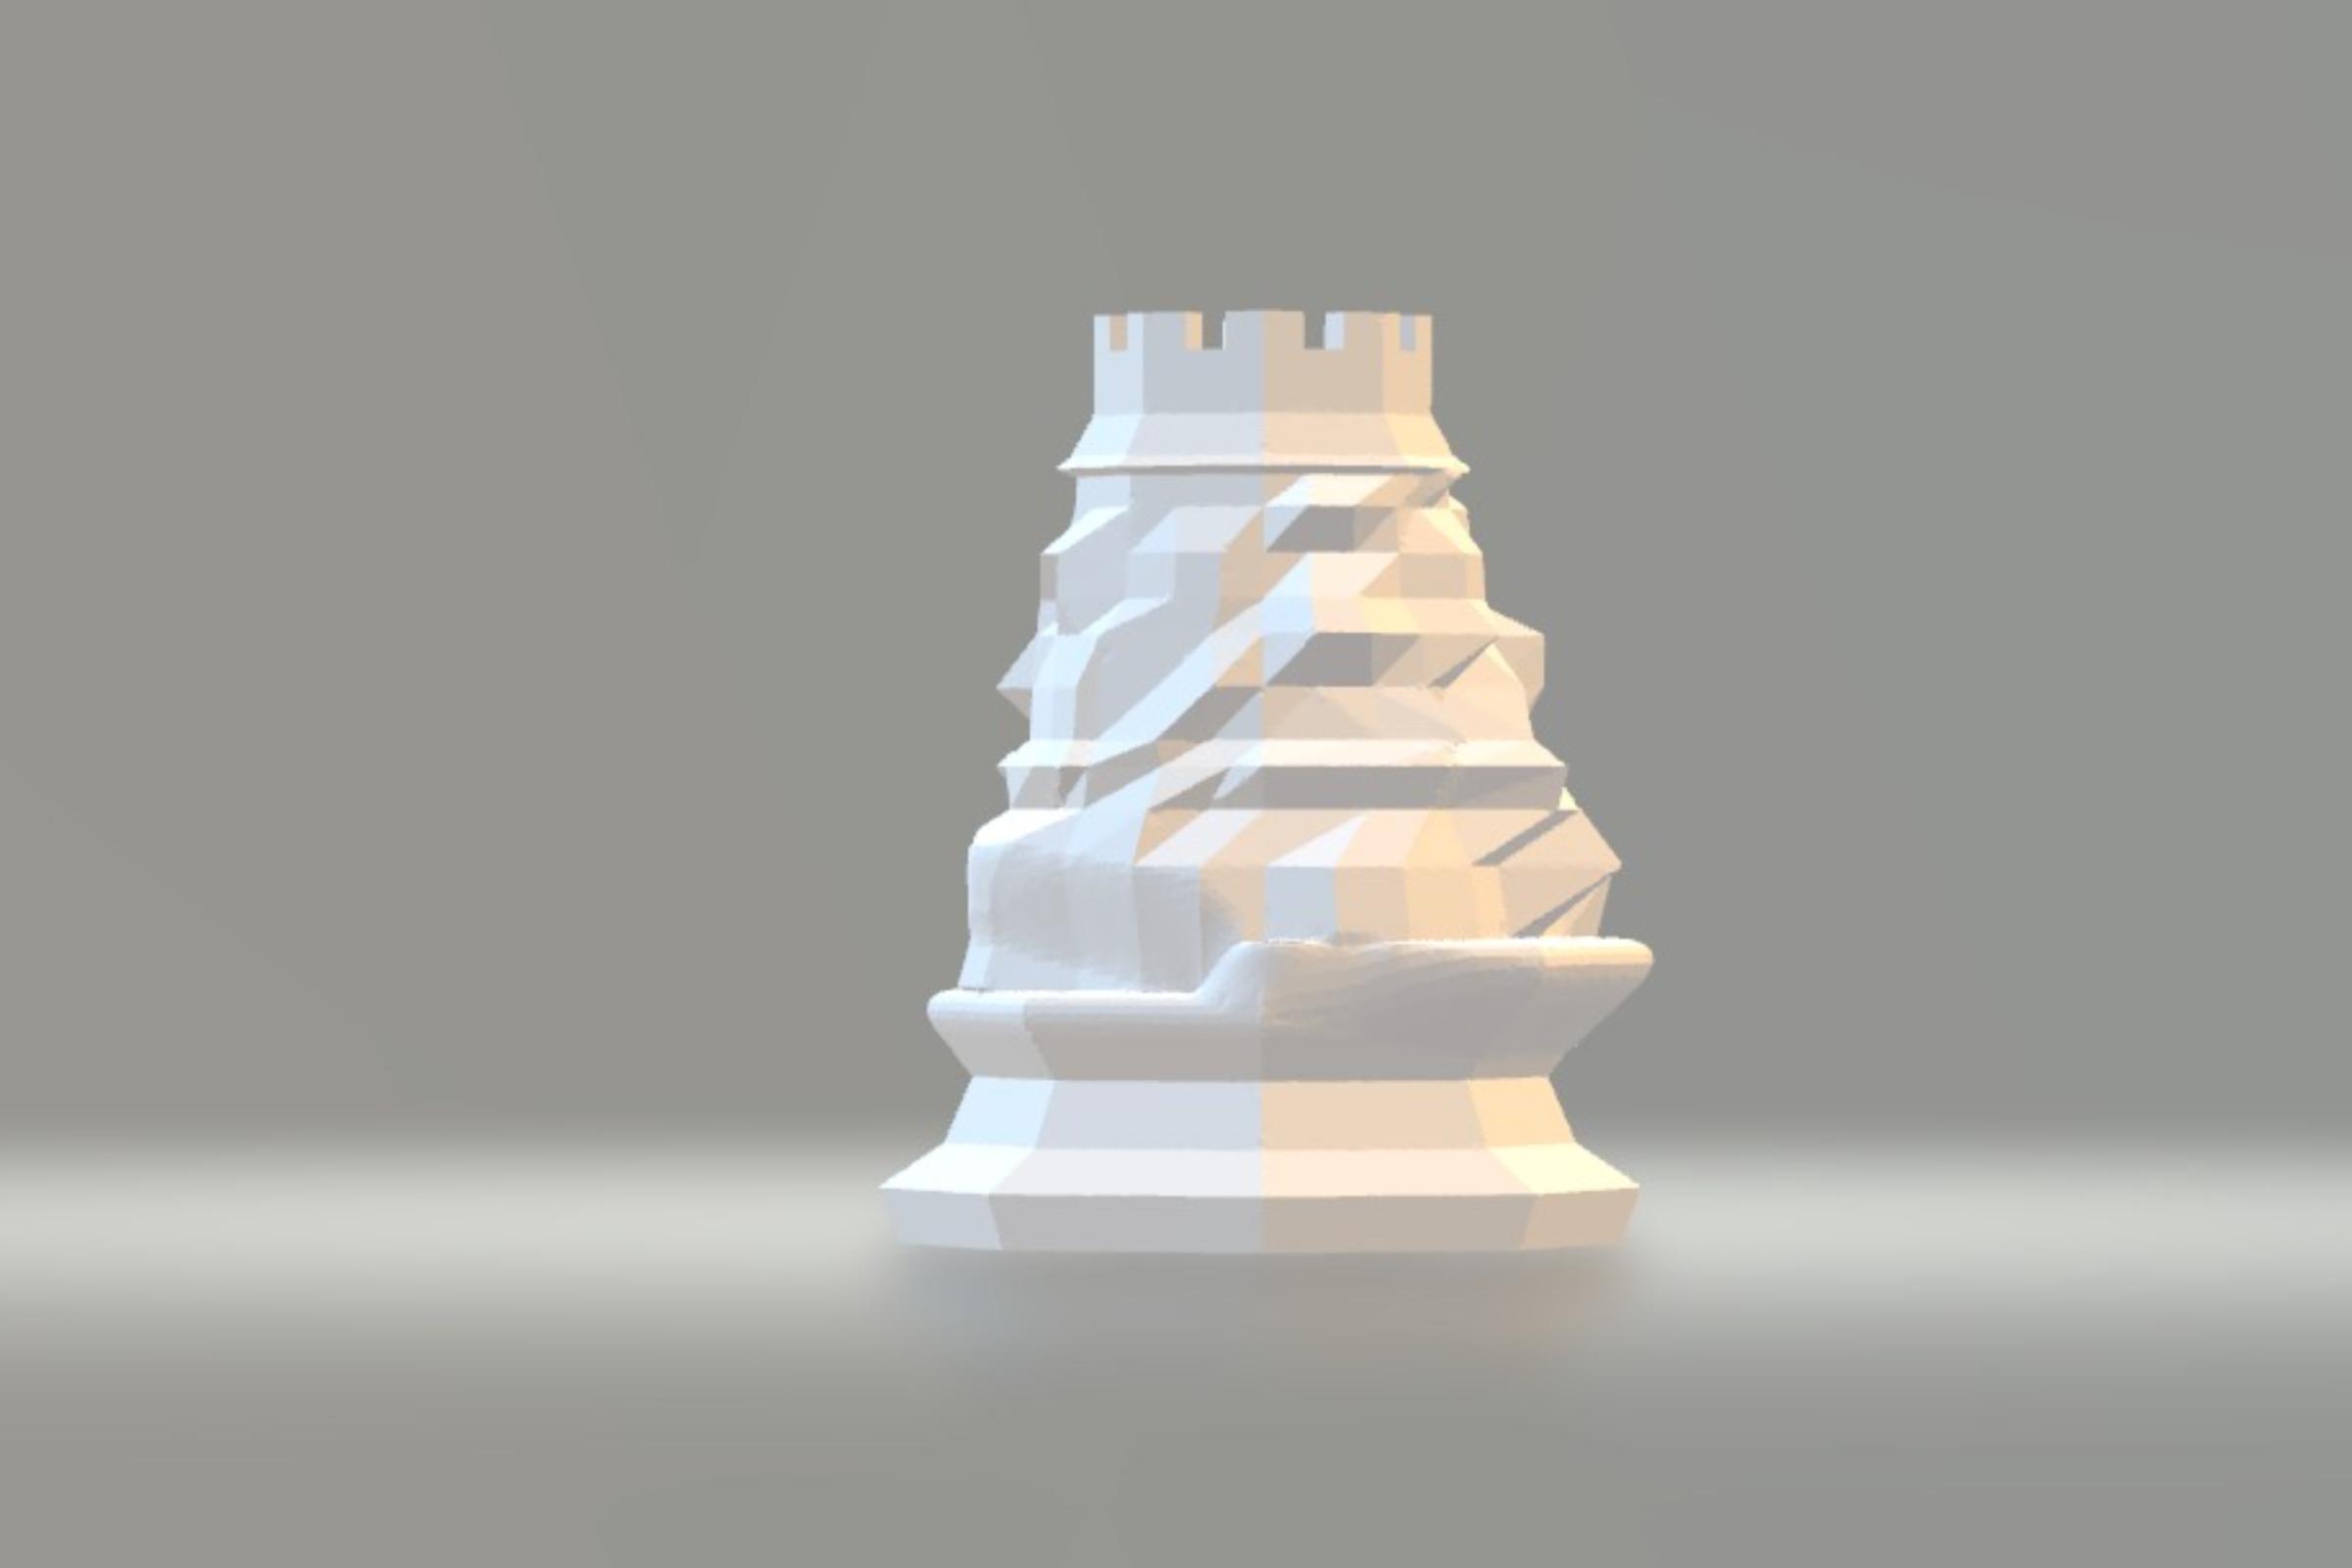 Chess set - Ankara city theme 3d model